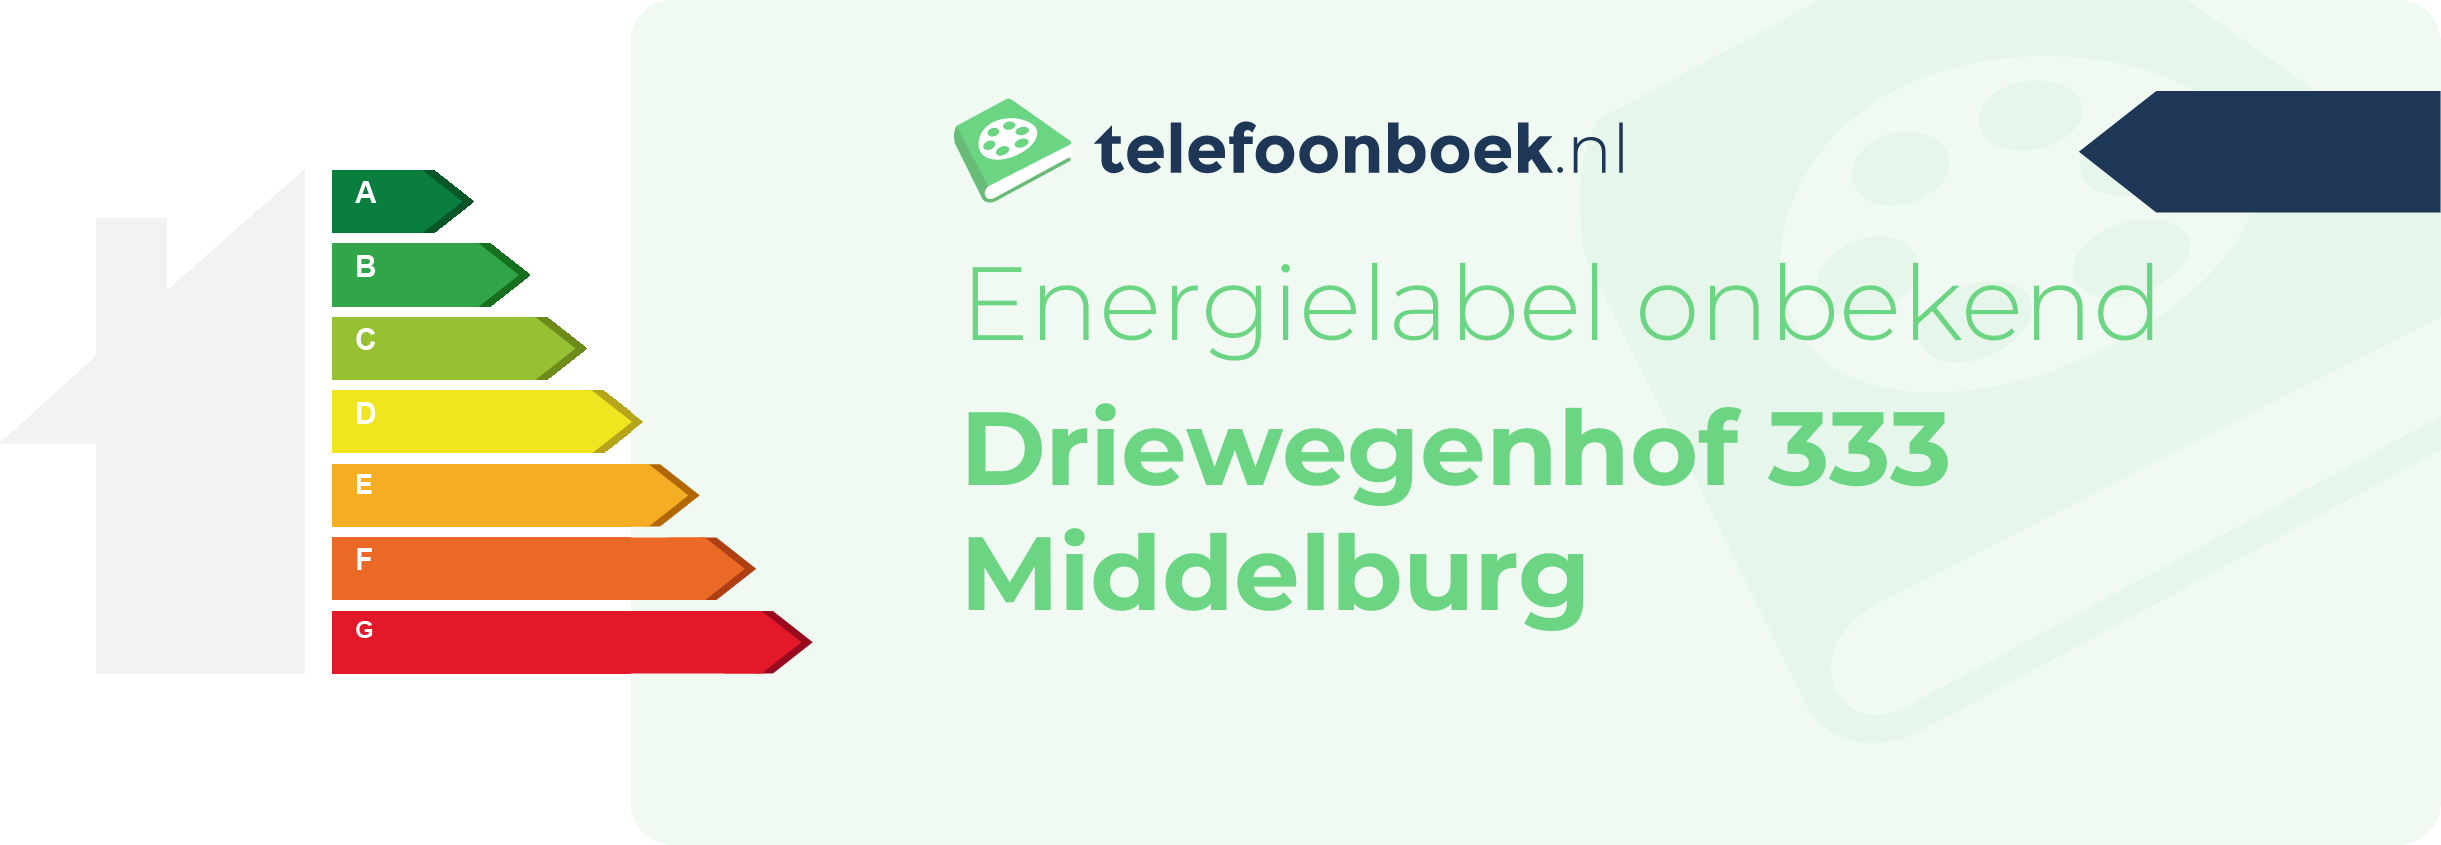 Energielabel Driewegenhof 333 Middelburg